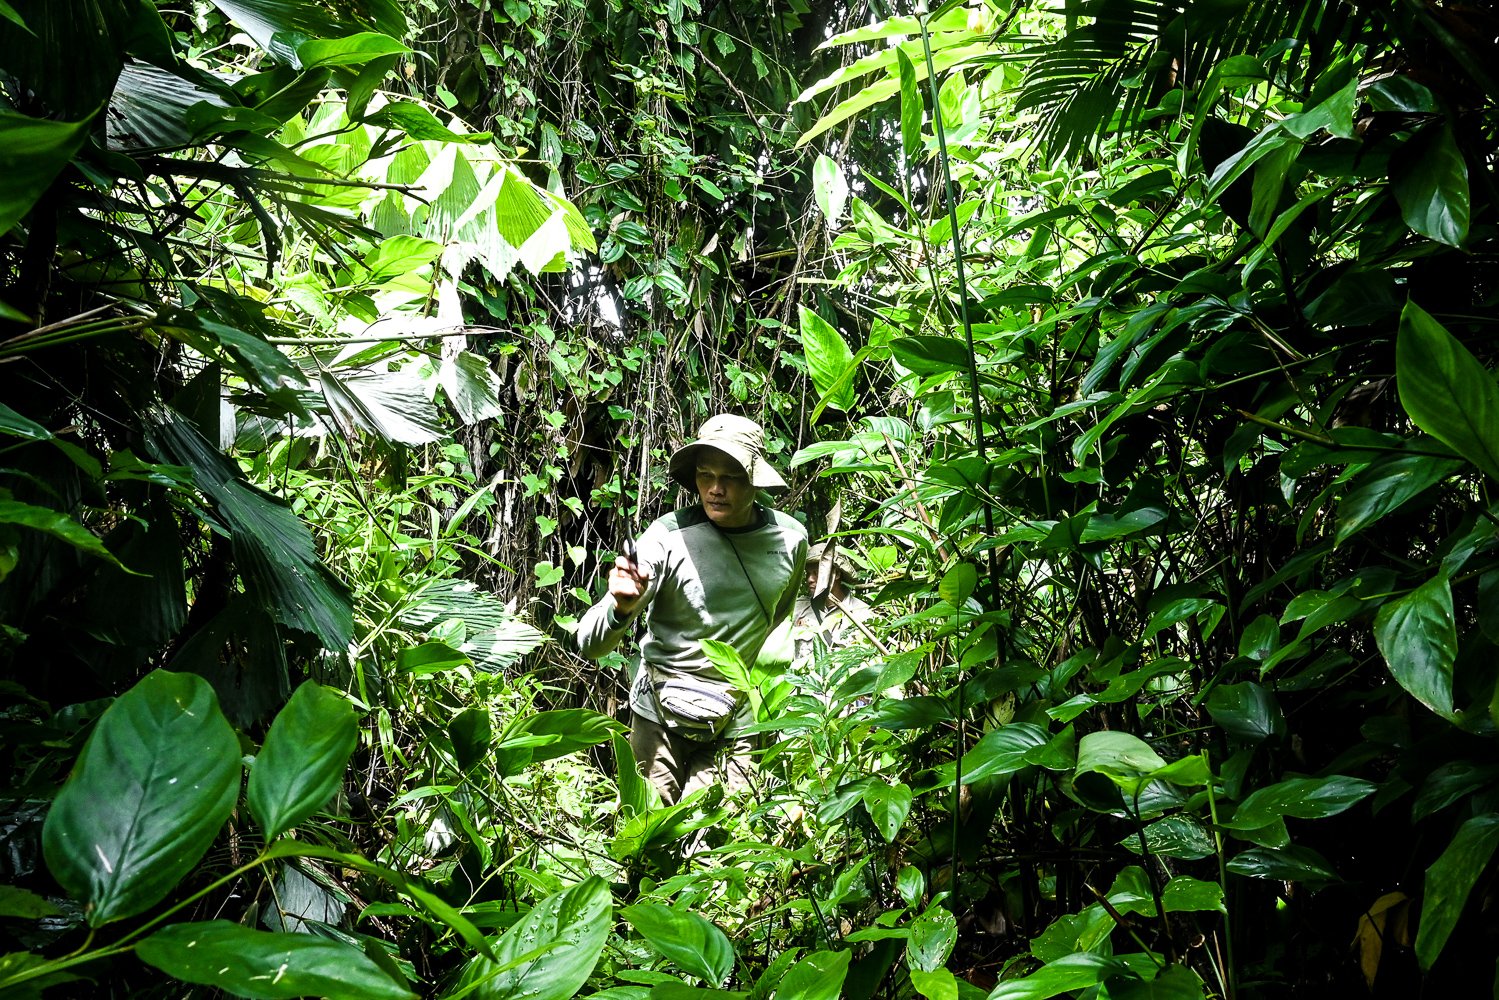 Seorang tracker (pembuka jalur) membabat beberapa tanaman saat pelaksanaan kegiatan Monitoring Badak Jawa (MBJ) di dalam hutan Taman Nasional Ujung Kulon, Banten.